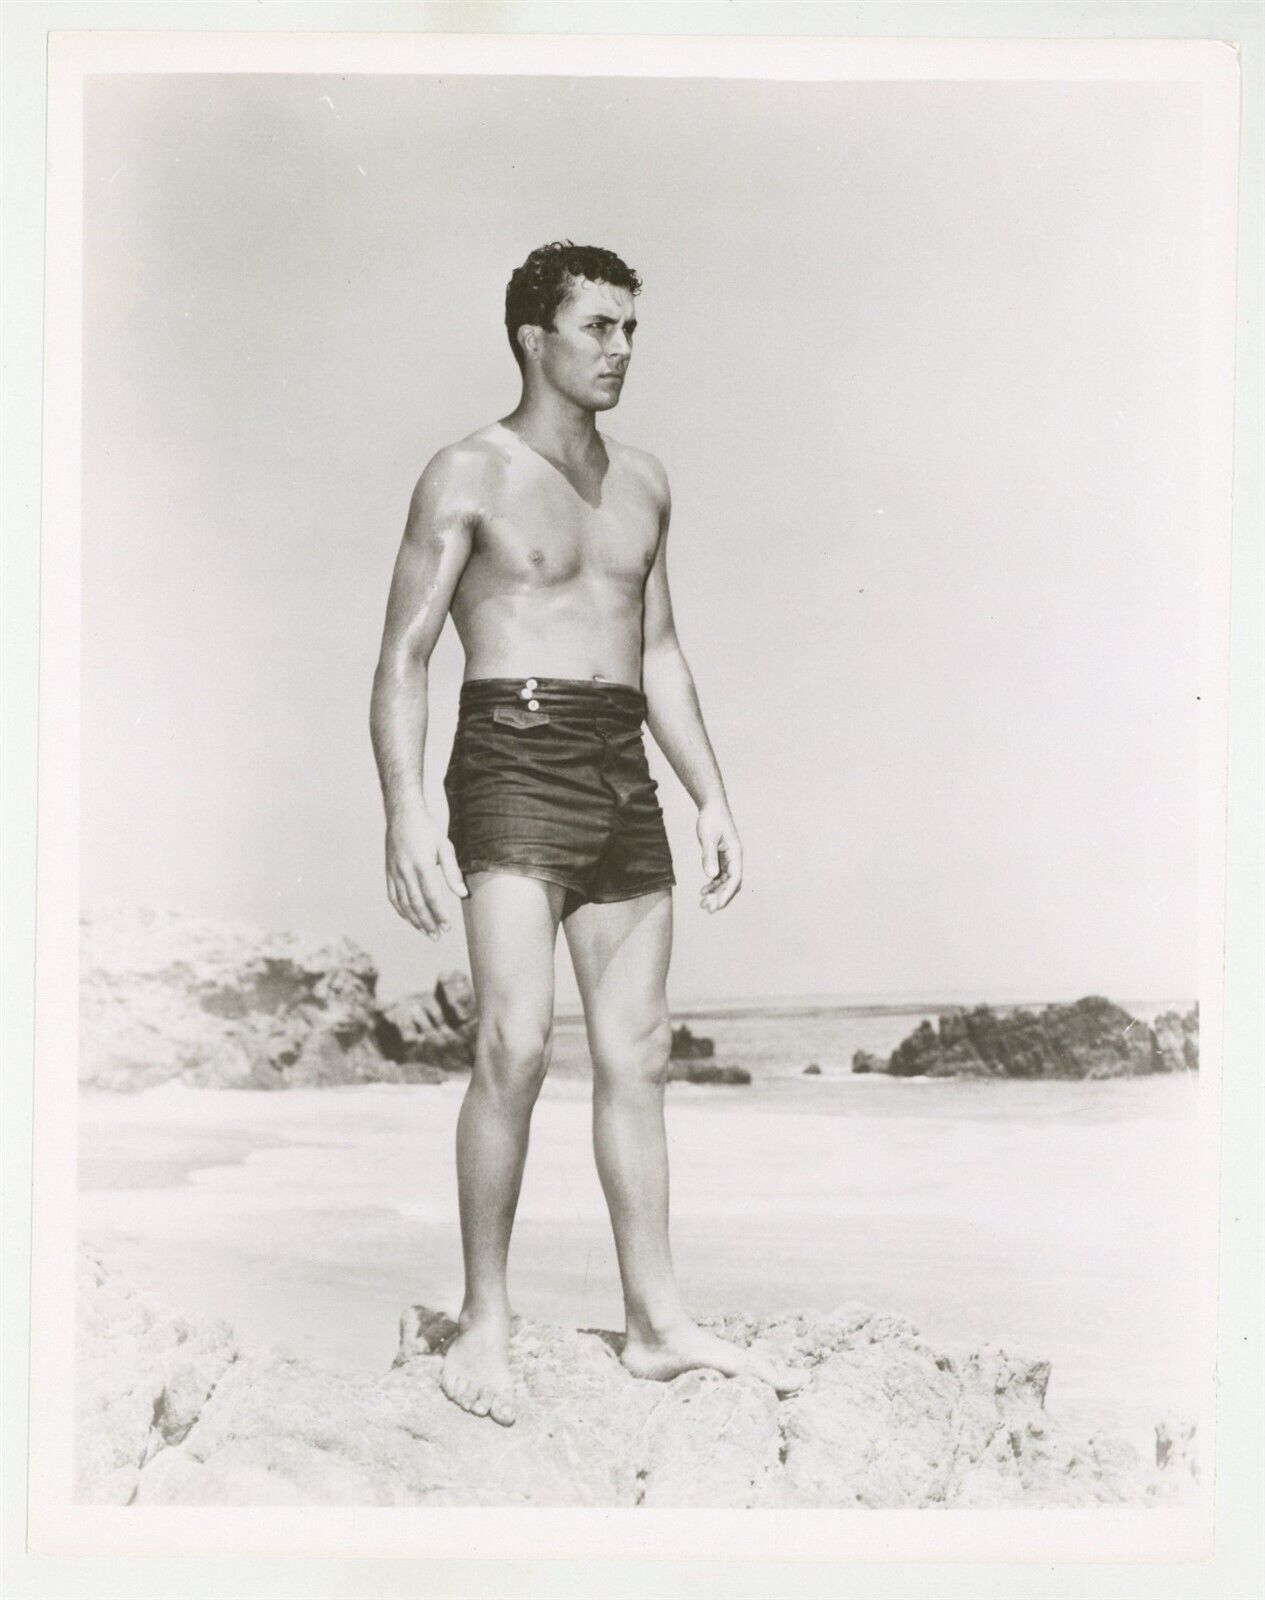 James Darren 1962 Fantastic Male Physique Photo 8x10 Gidget Beach Boy Hunk Gay